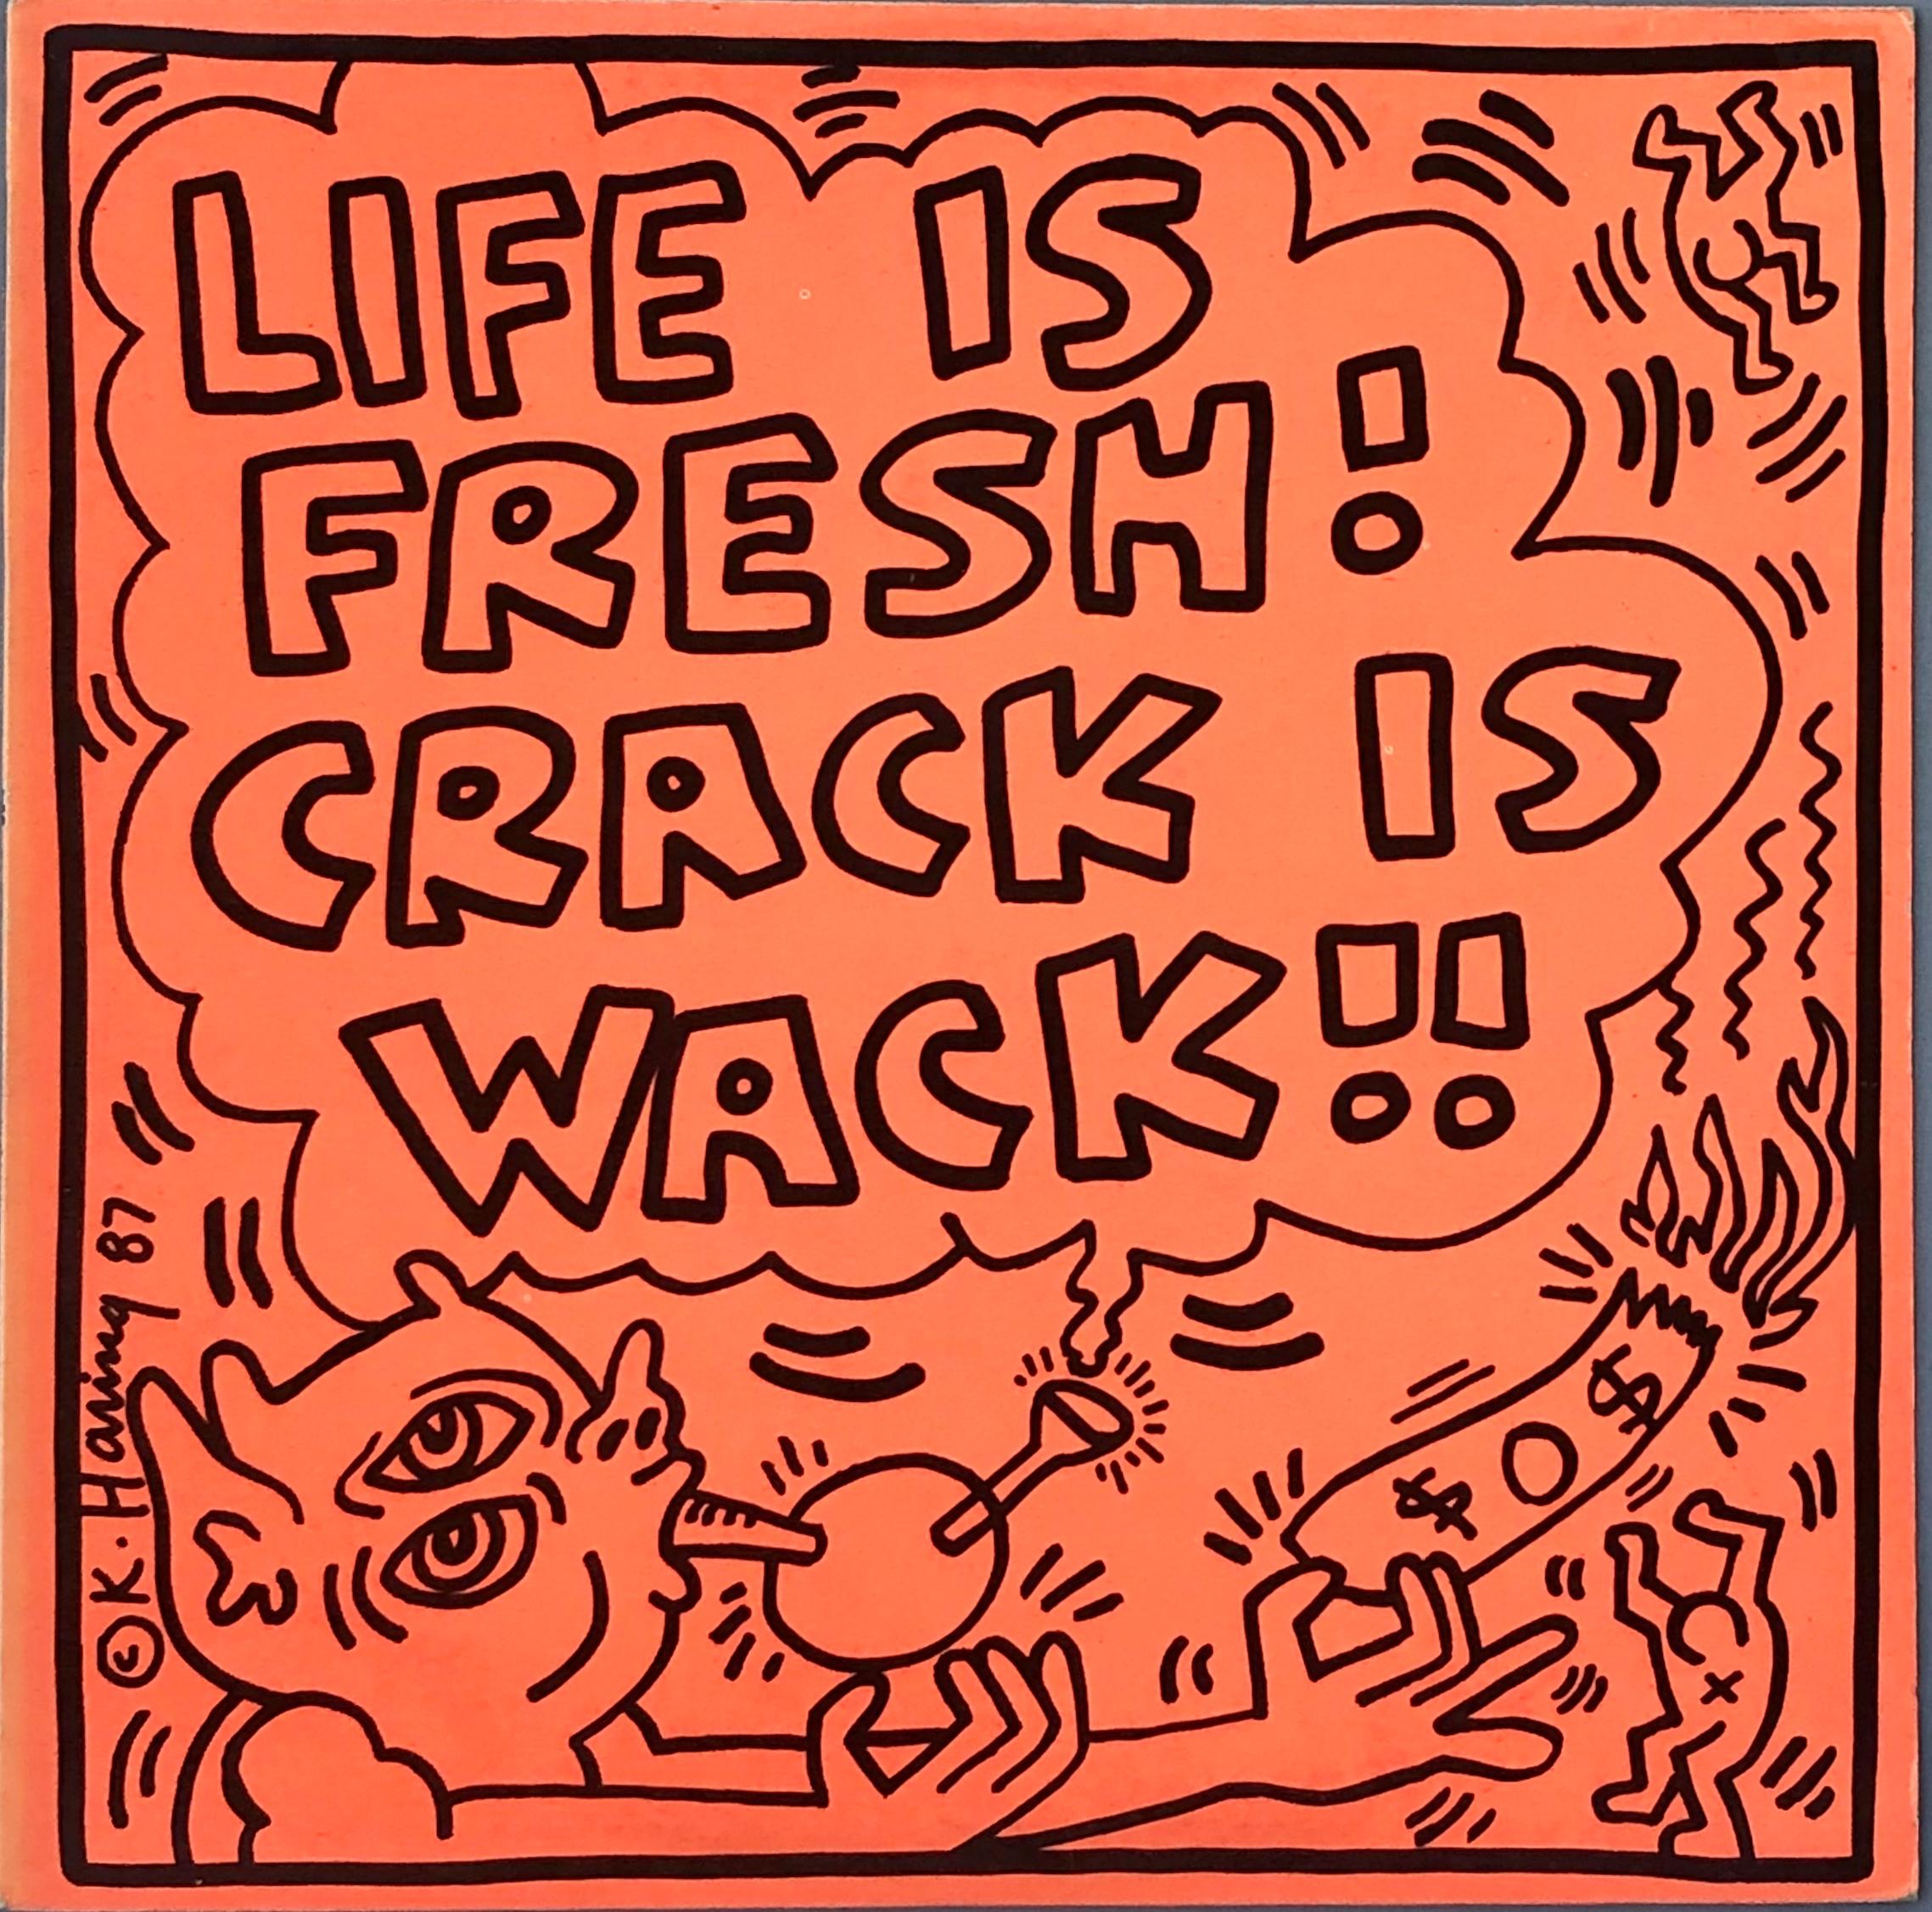 Rare original Keith Haring Vinyl Record Art (Keith Haring Crack Is Wack)  1